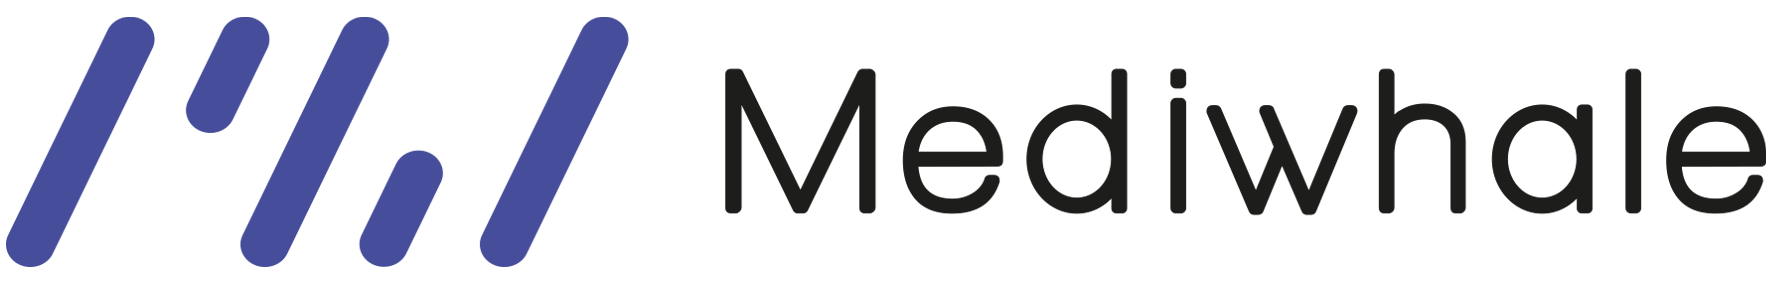 Mediwhale logo